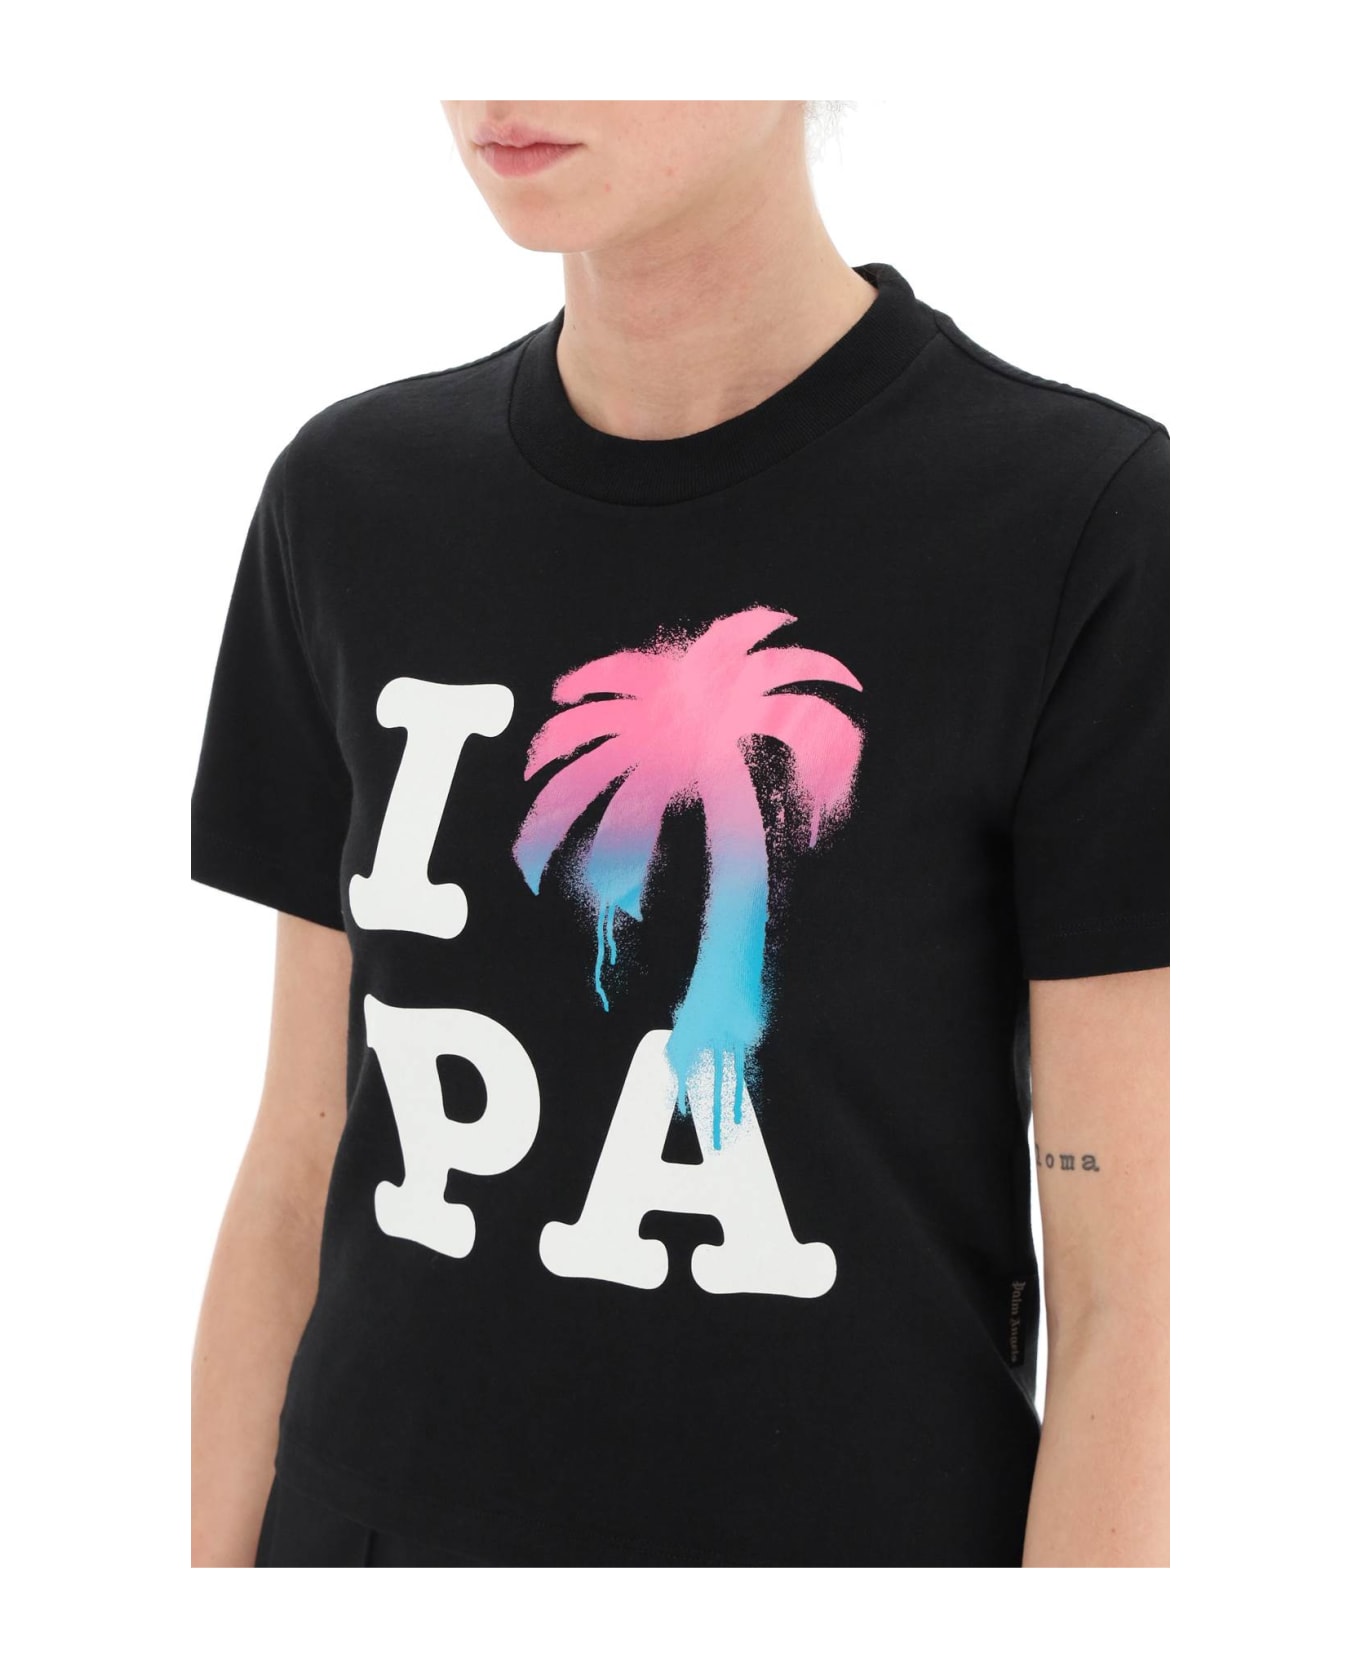 Palm Angels 'i Love Pa' T-shirt - Nero Tシャツ